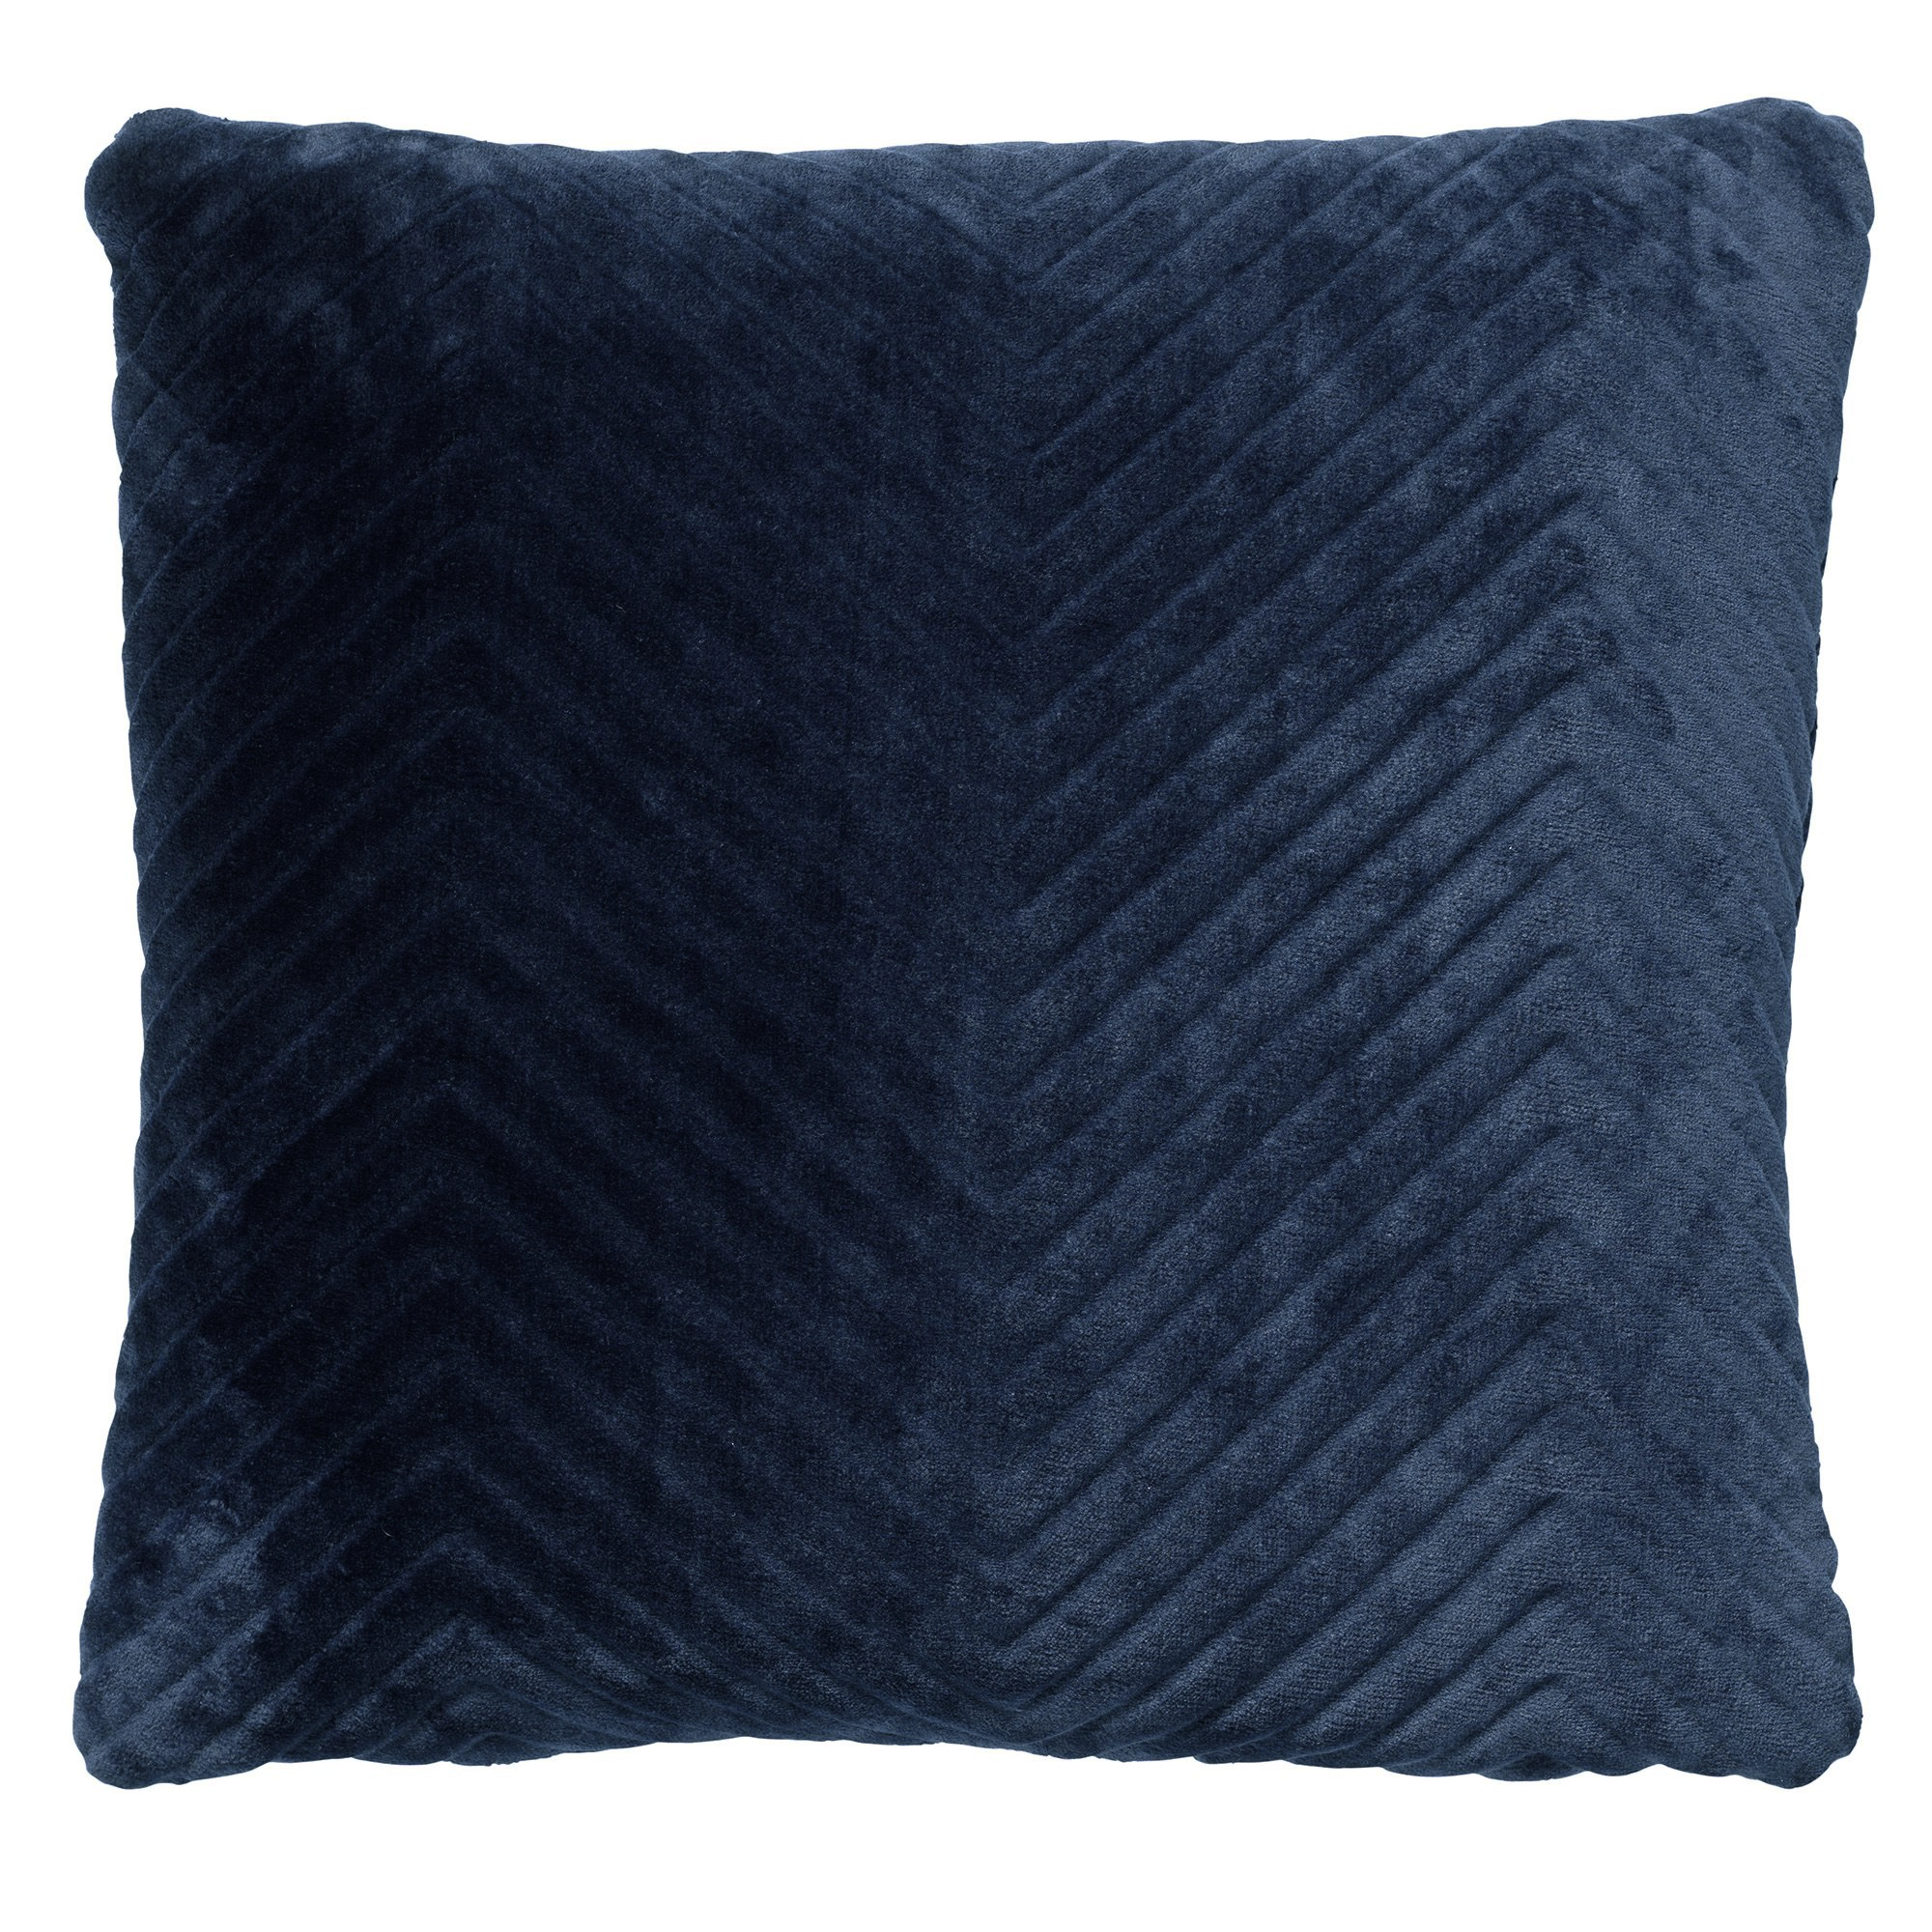 ZICO - Kussenhoes zigzag 45x45 cm Insignia Blue - blauw - superzacht